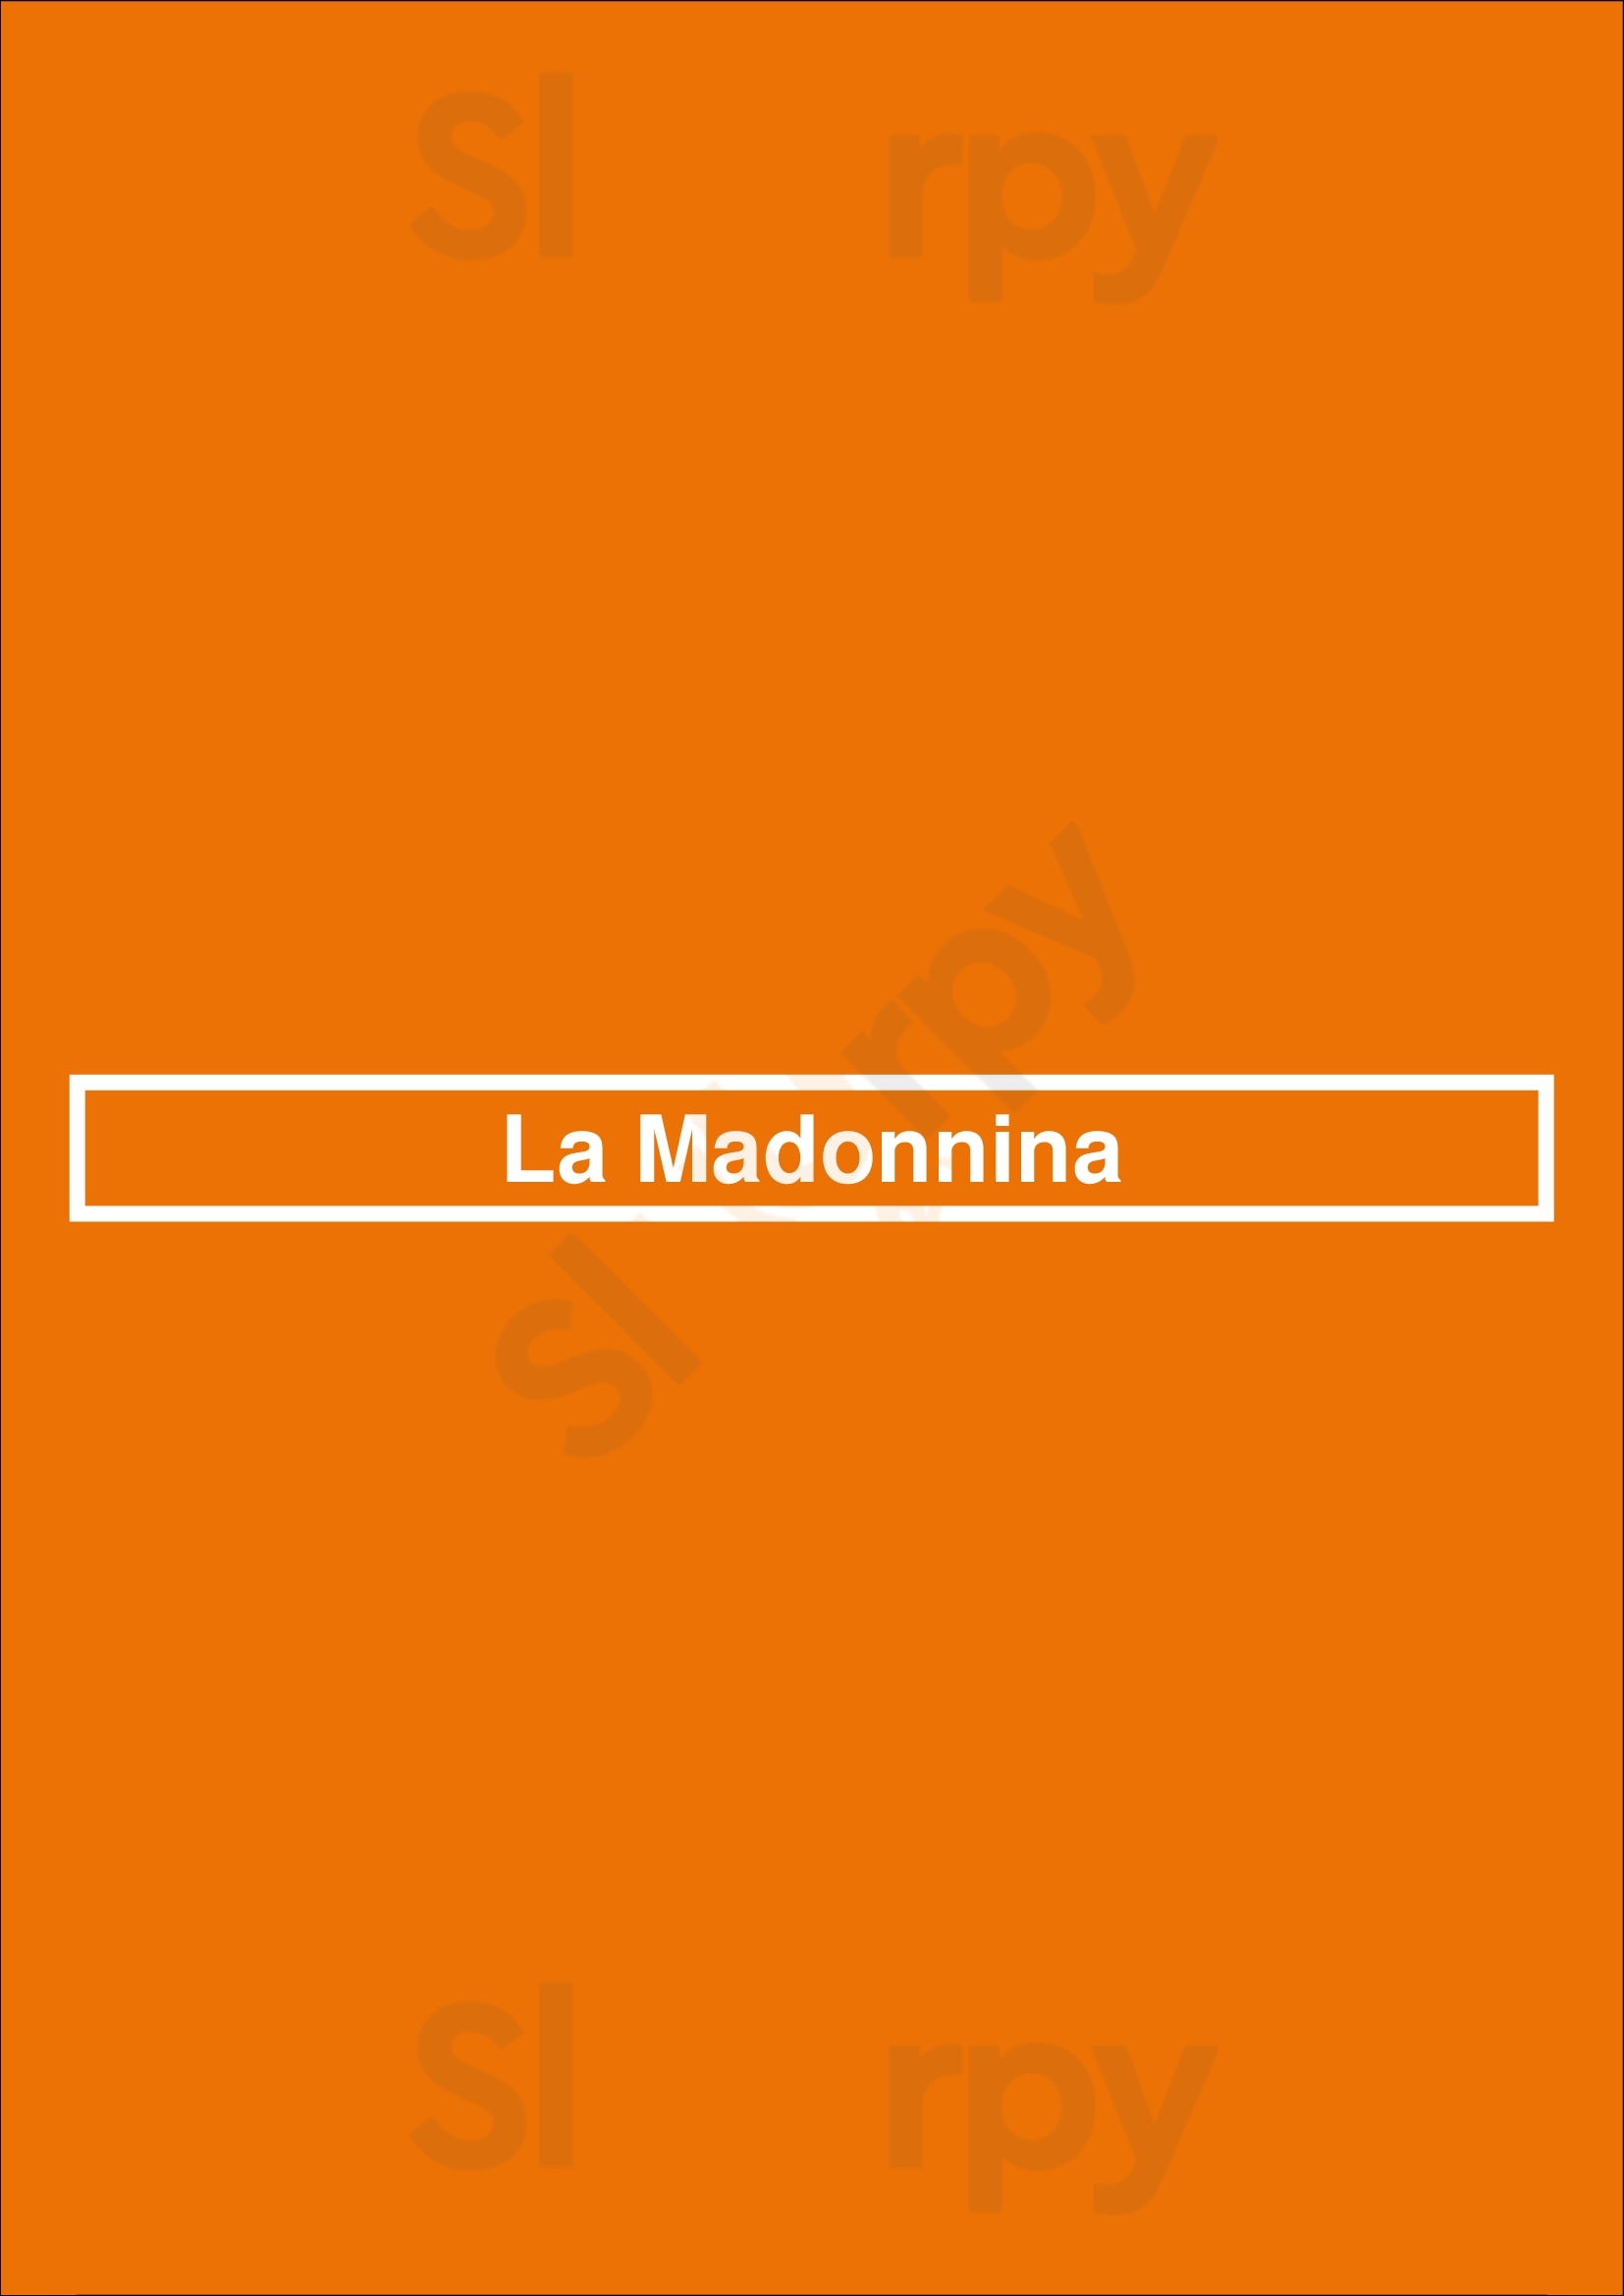 La Madonnina Amsterdam Menu - 1